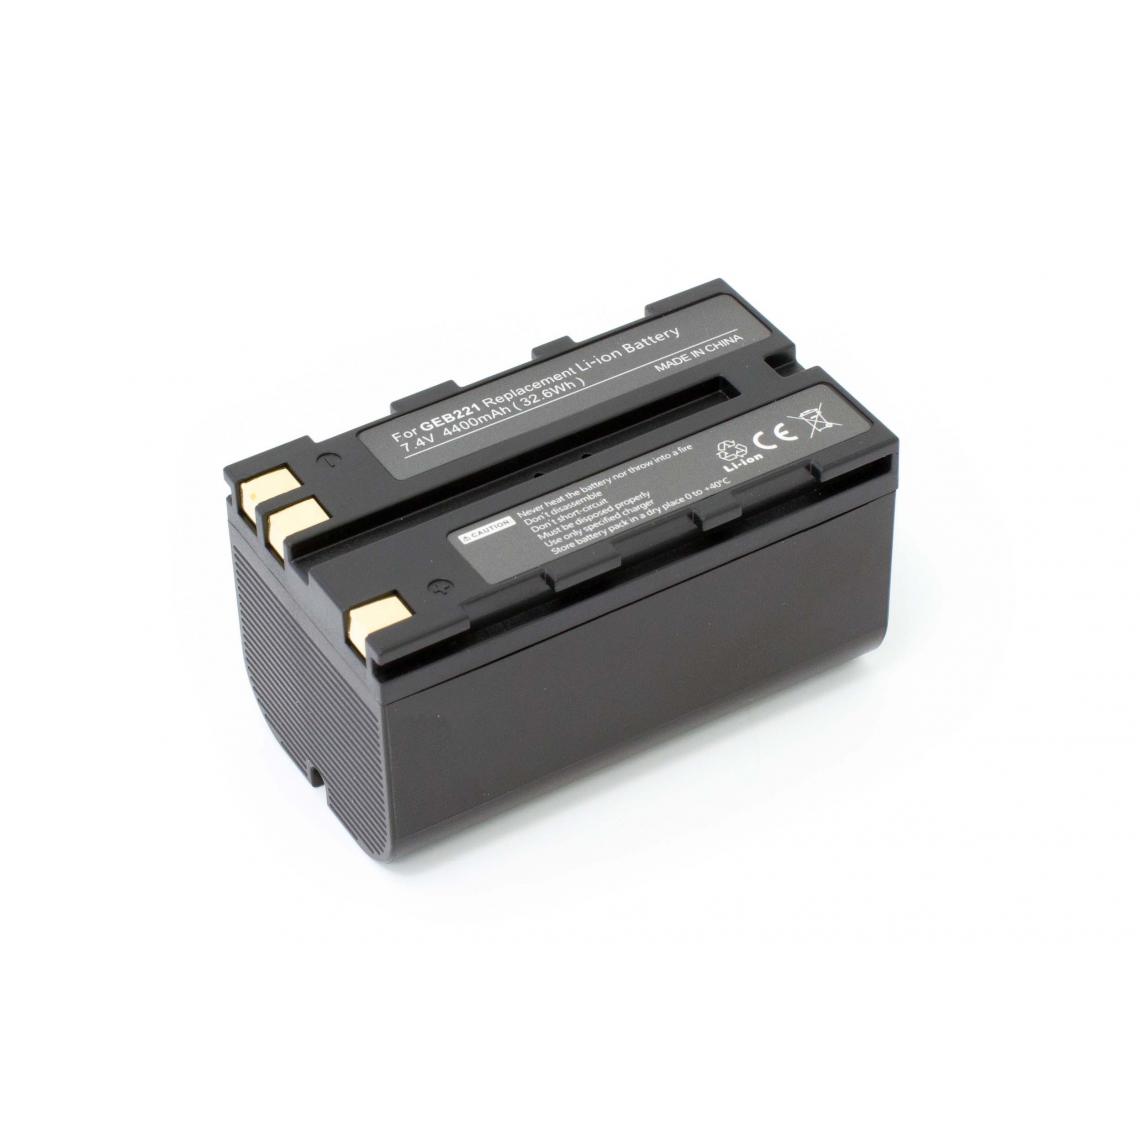 Vhbw - vhbw Batterie compatible avec Leica Viva TS11, TS12, TS15 dispositif de mesure laser, outil de mesure (4400mAh, 7,4V, Li-ion) - Piles rechargeables